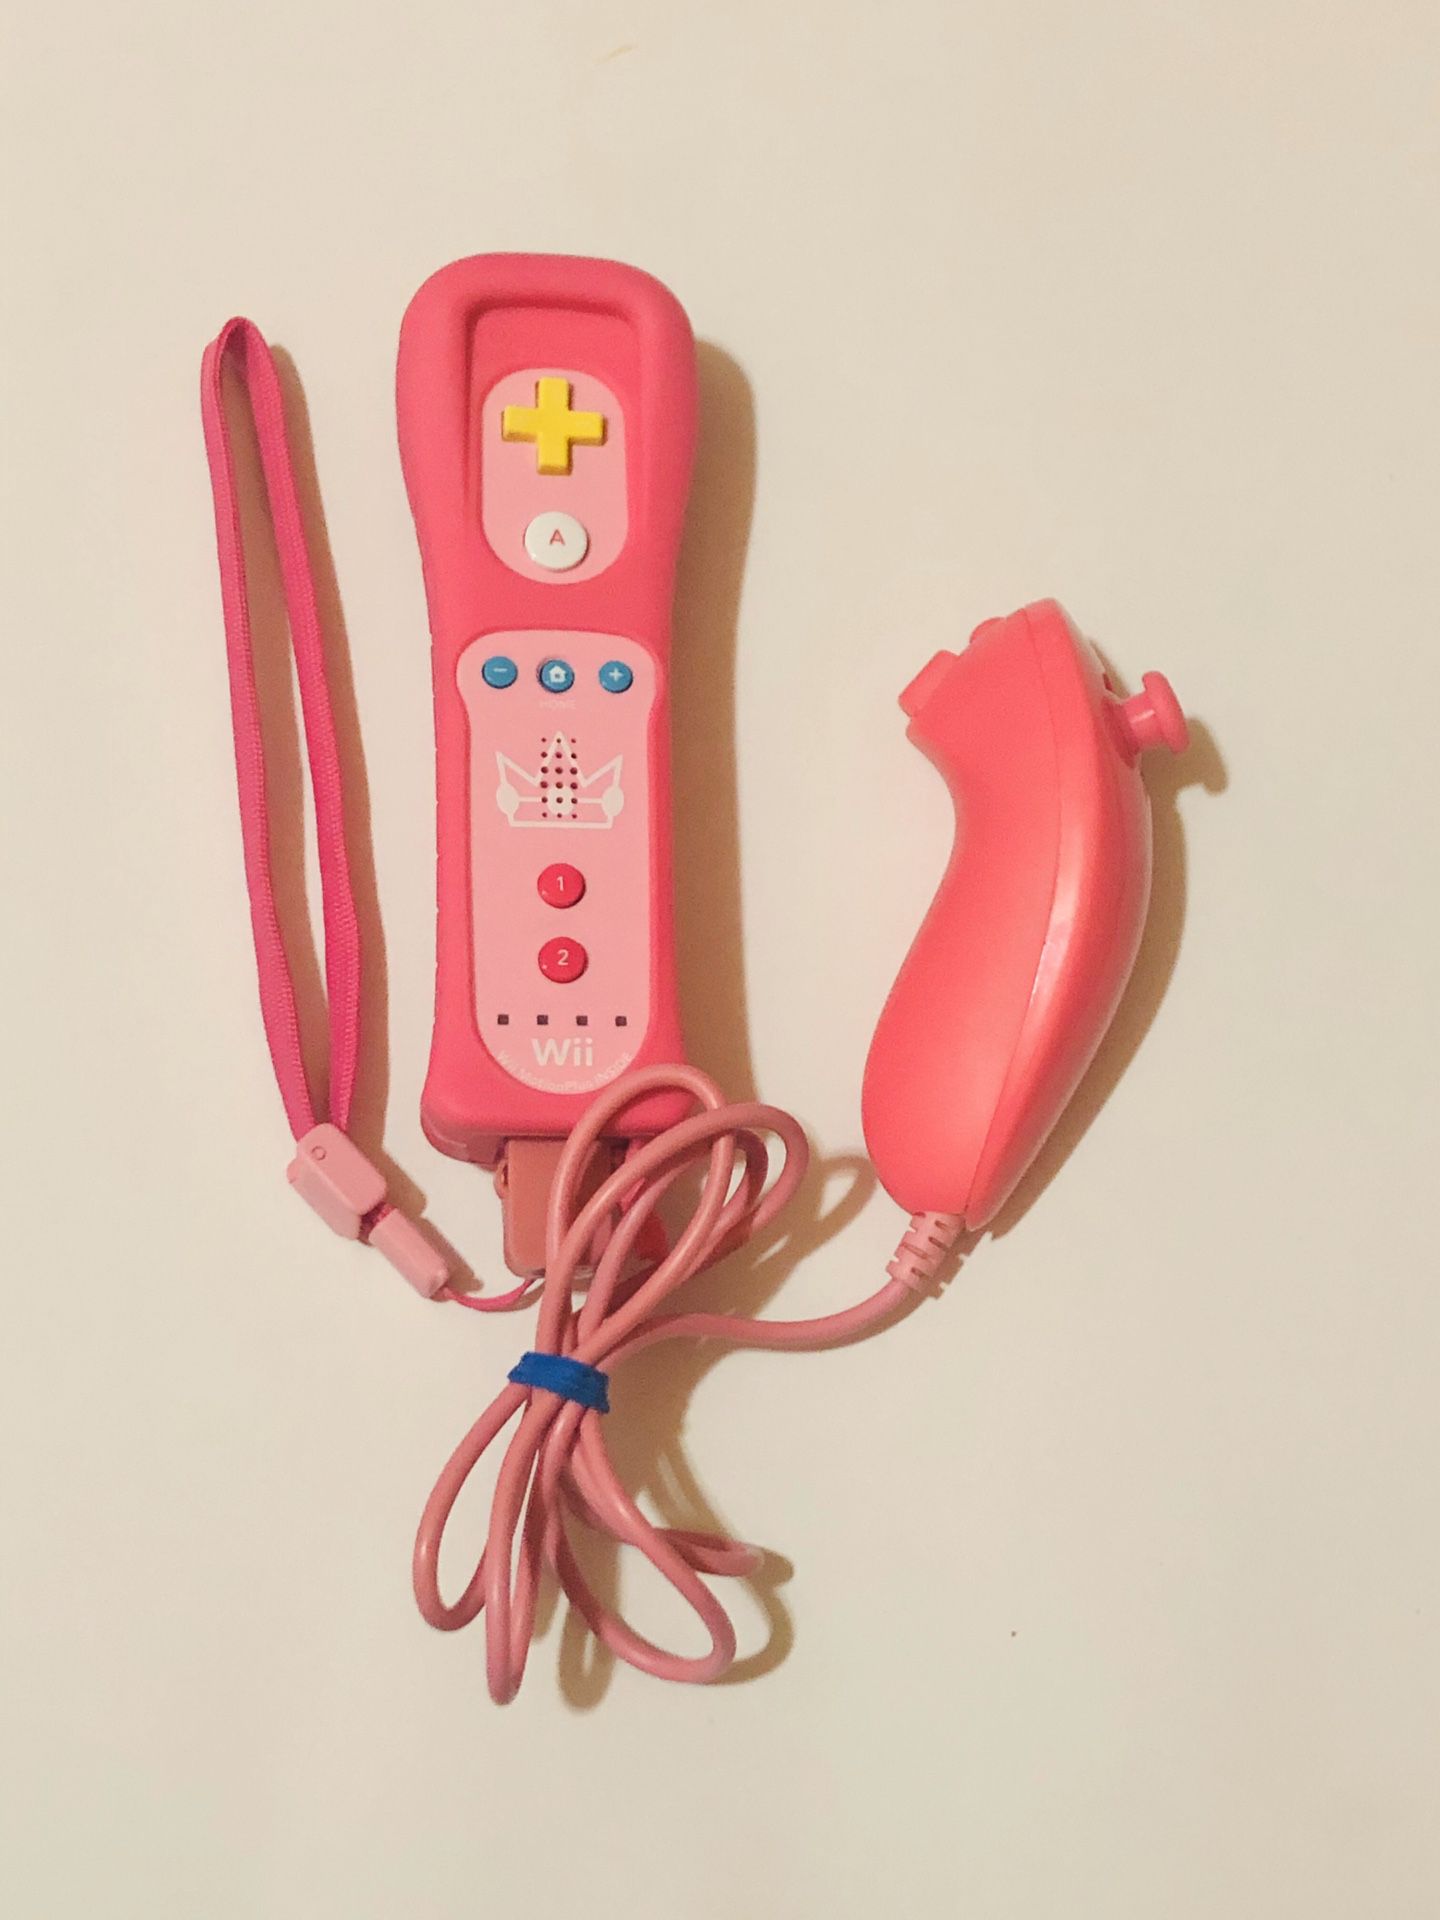 Princess peach motion plus controller nintendo Wii